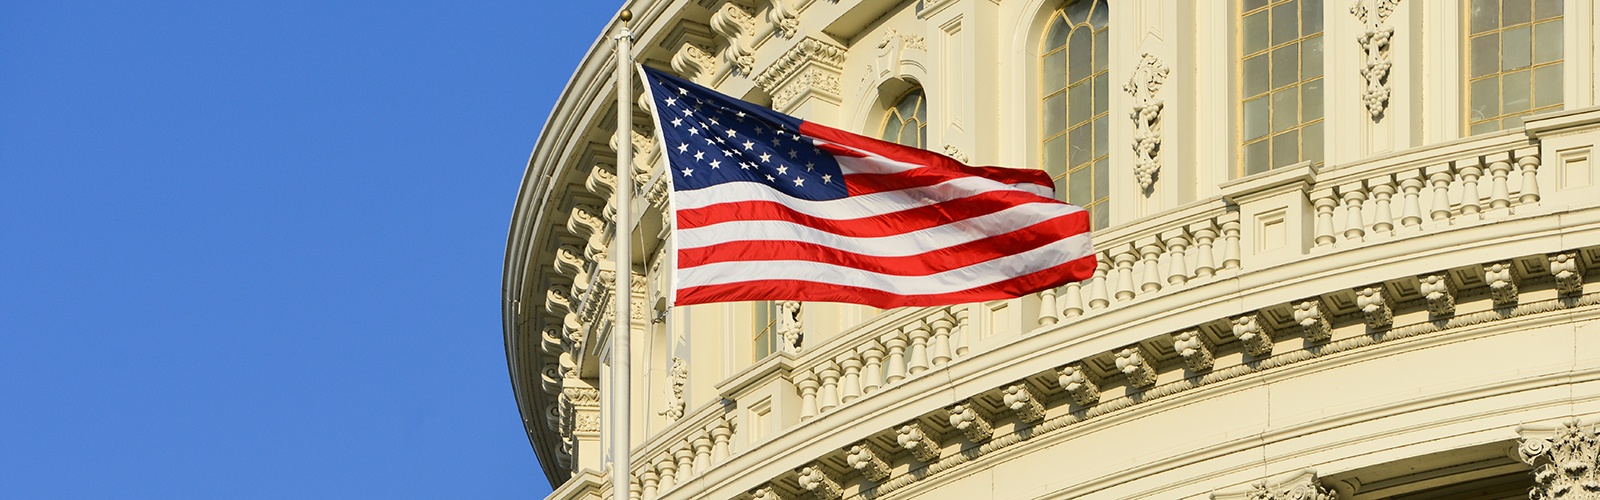 Capitol Building American Flag